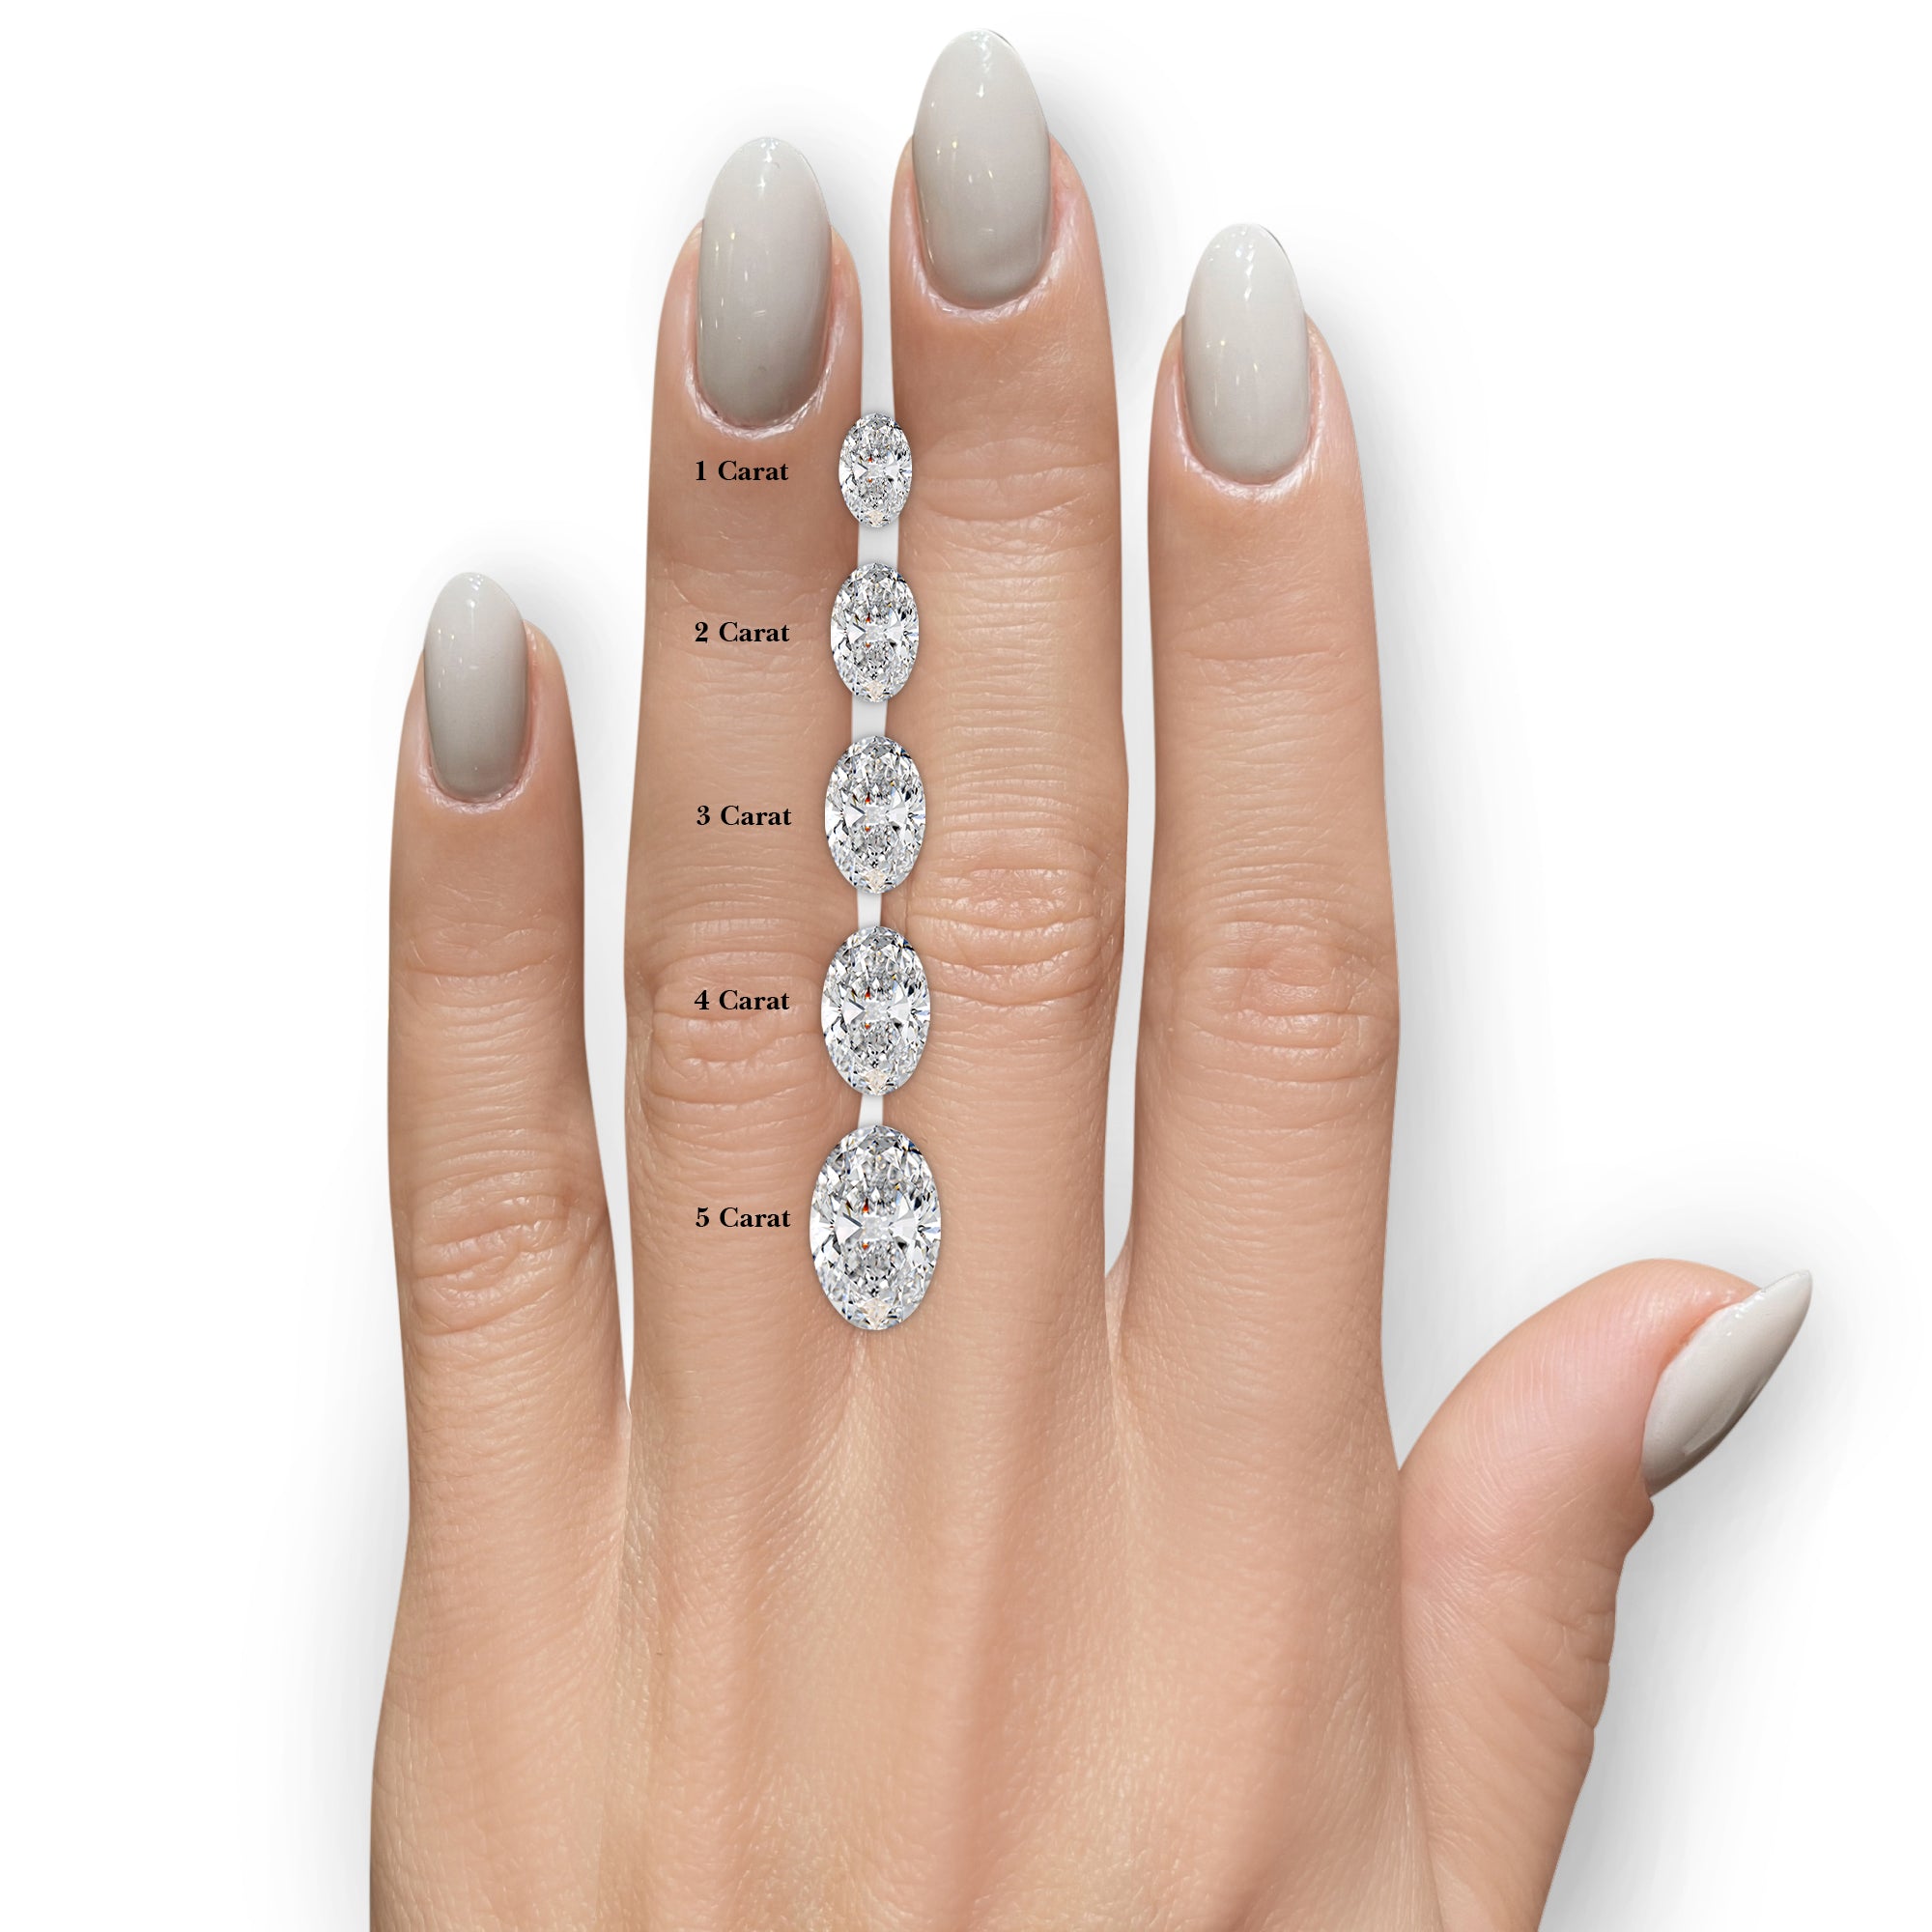 Lucy Lab Grown Diamond Ring -18K White Gold